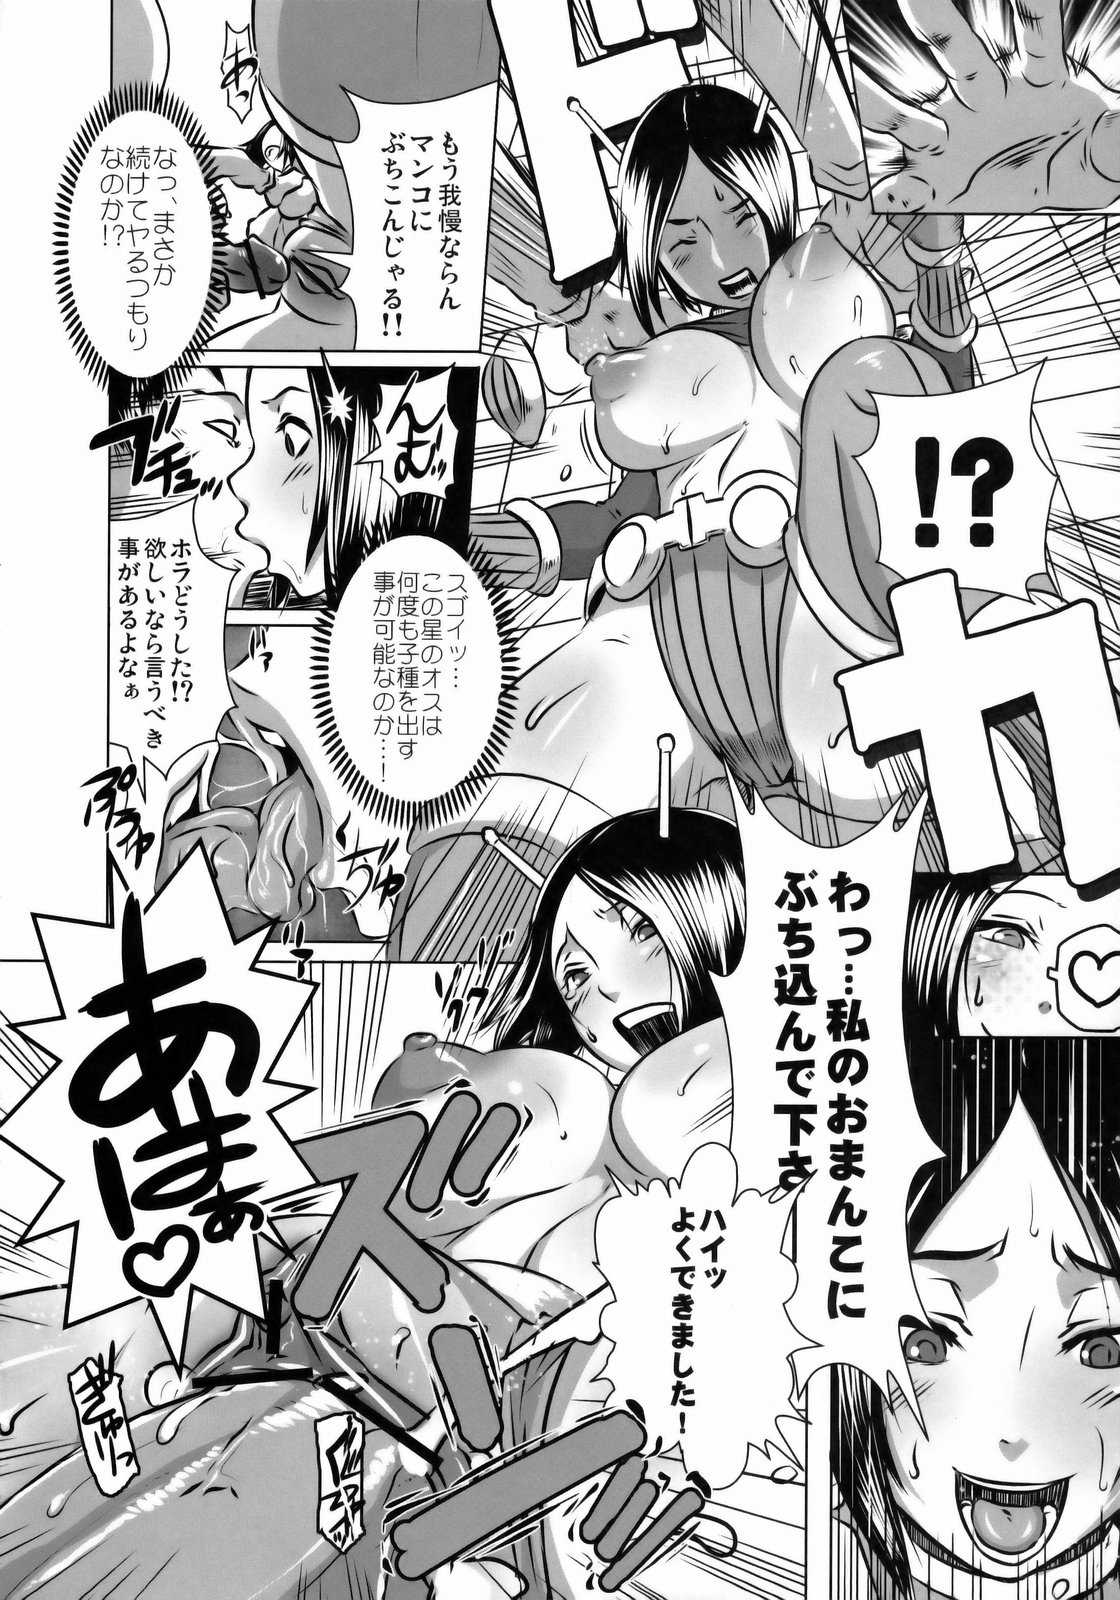 [EROQUIS!] SEXUAL ALIEN! Benjo no Megami ha Uchuujin! (Original) [EROQUIS!] SEXUAL ALIEN! 便所の女神は宇宙人! (オリジナル)